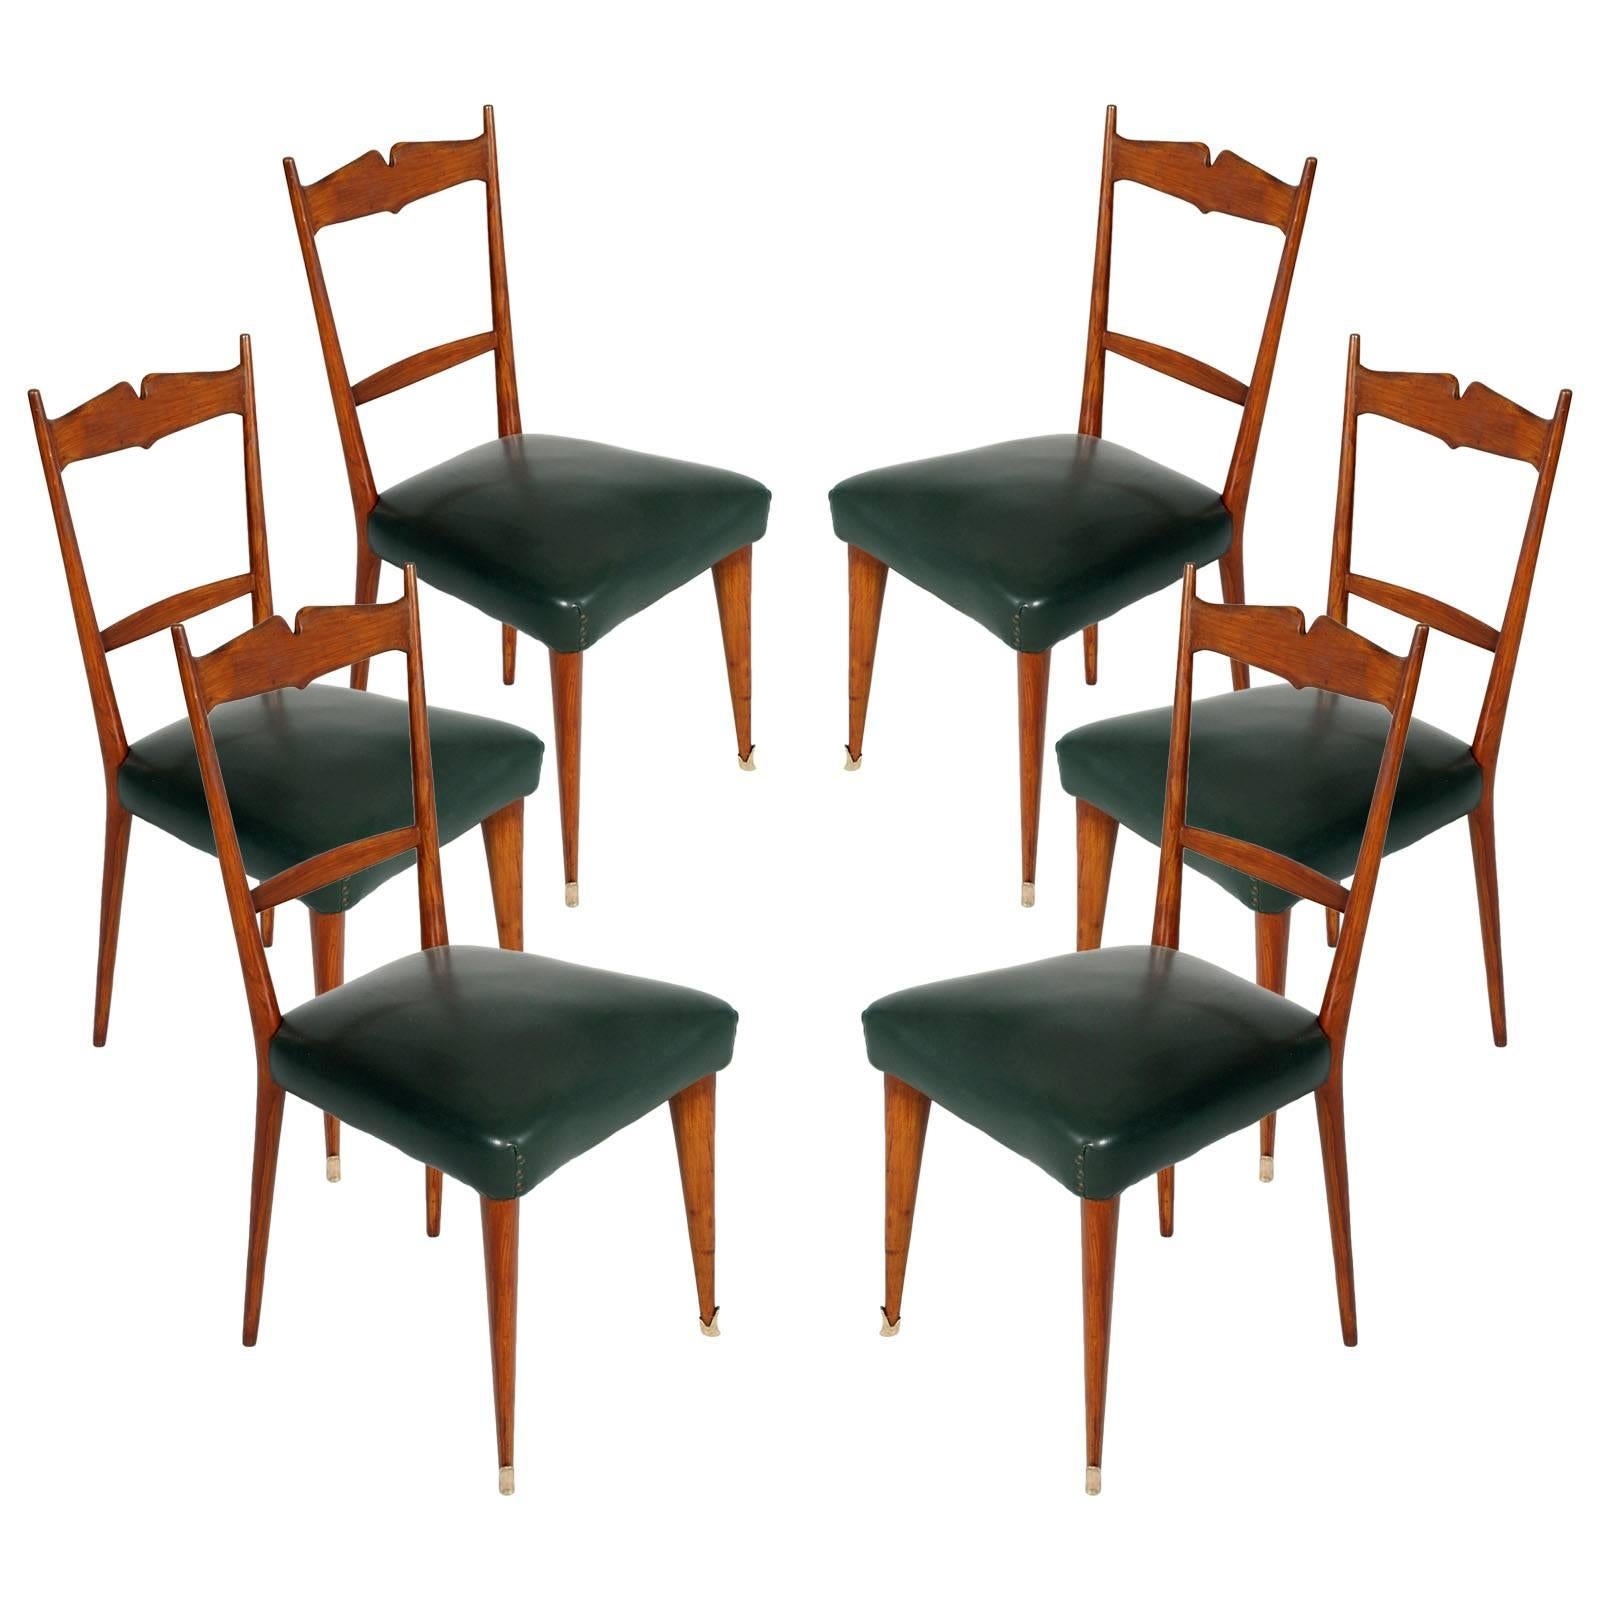 Italian Midcentury Six Chairs Ico and Luisa Parisi Attributed Cherrywood